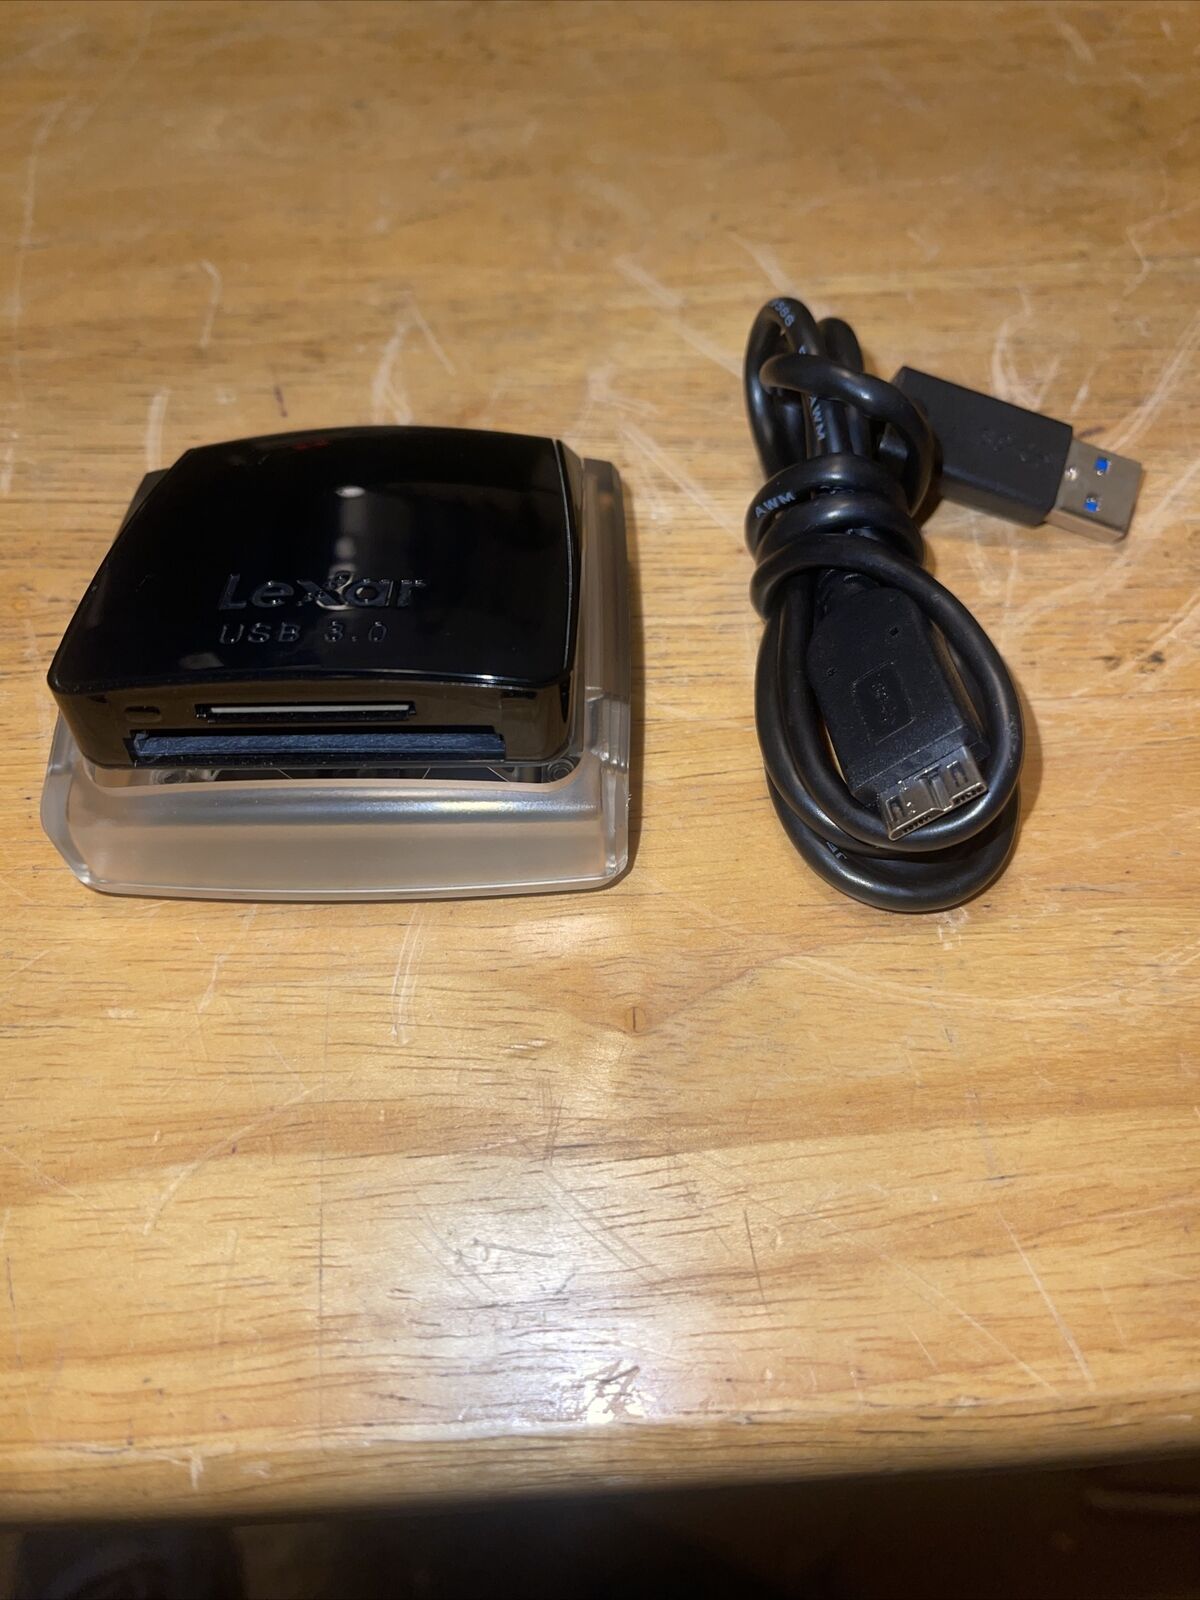 LEXAR LRW300U Professional USB 3.0 Dual Slot Memory Card Reader w/Cord